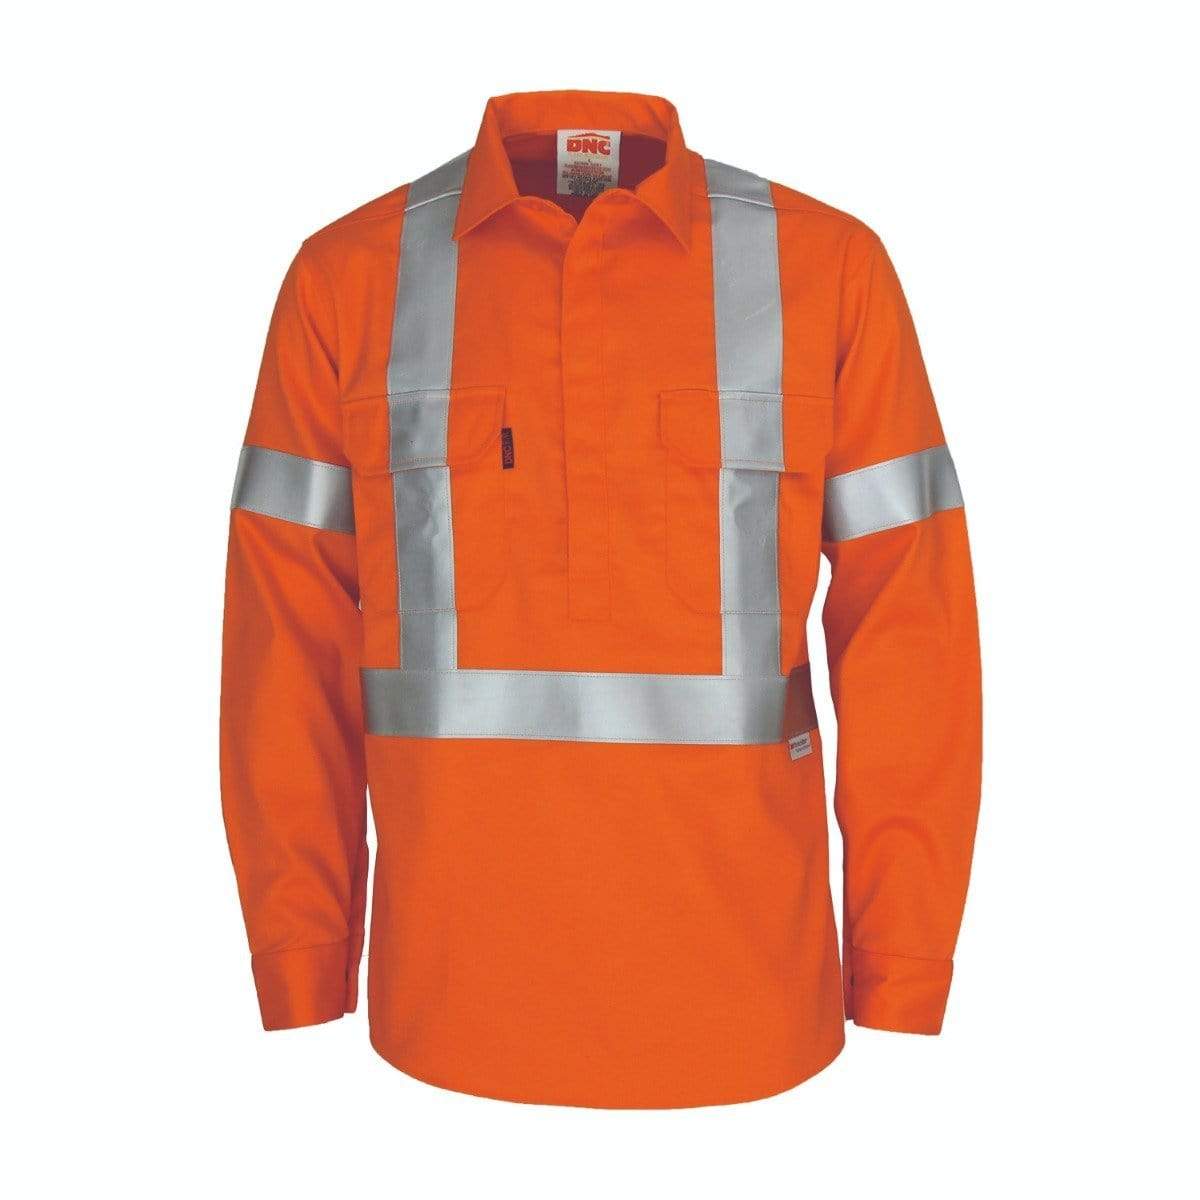 Dnc Workwear Patron Saint Flame Retardant Arc Rated Closed Long Sleeve Front Shirt With "X" Back 3m Fr Reflective Tape - 3408 Work Wear DNC Workwear Orange XS 